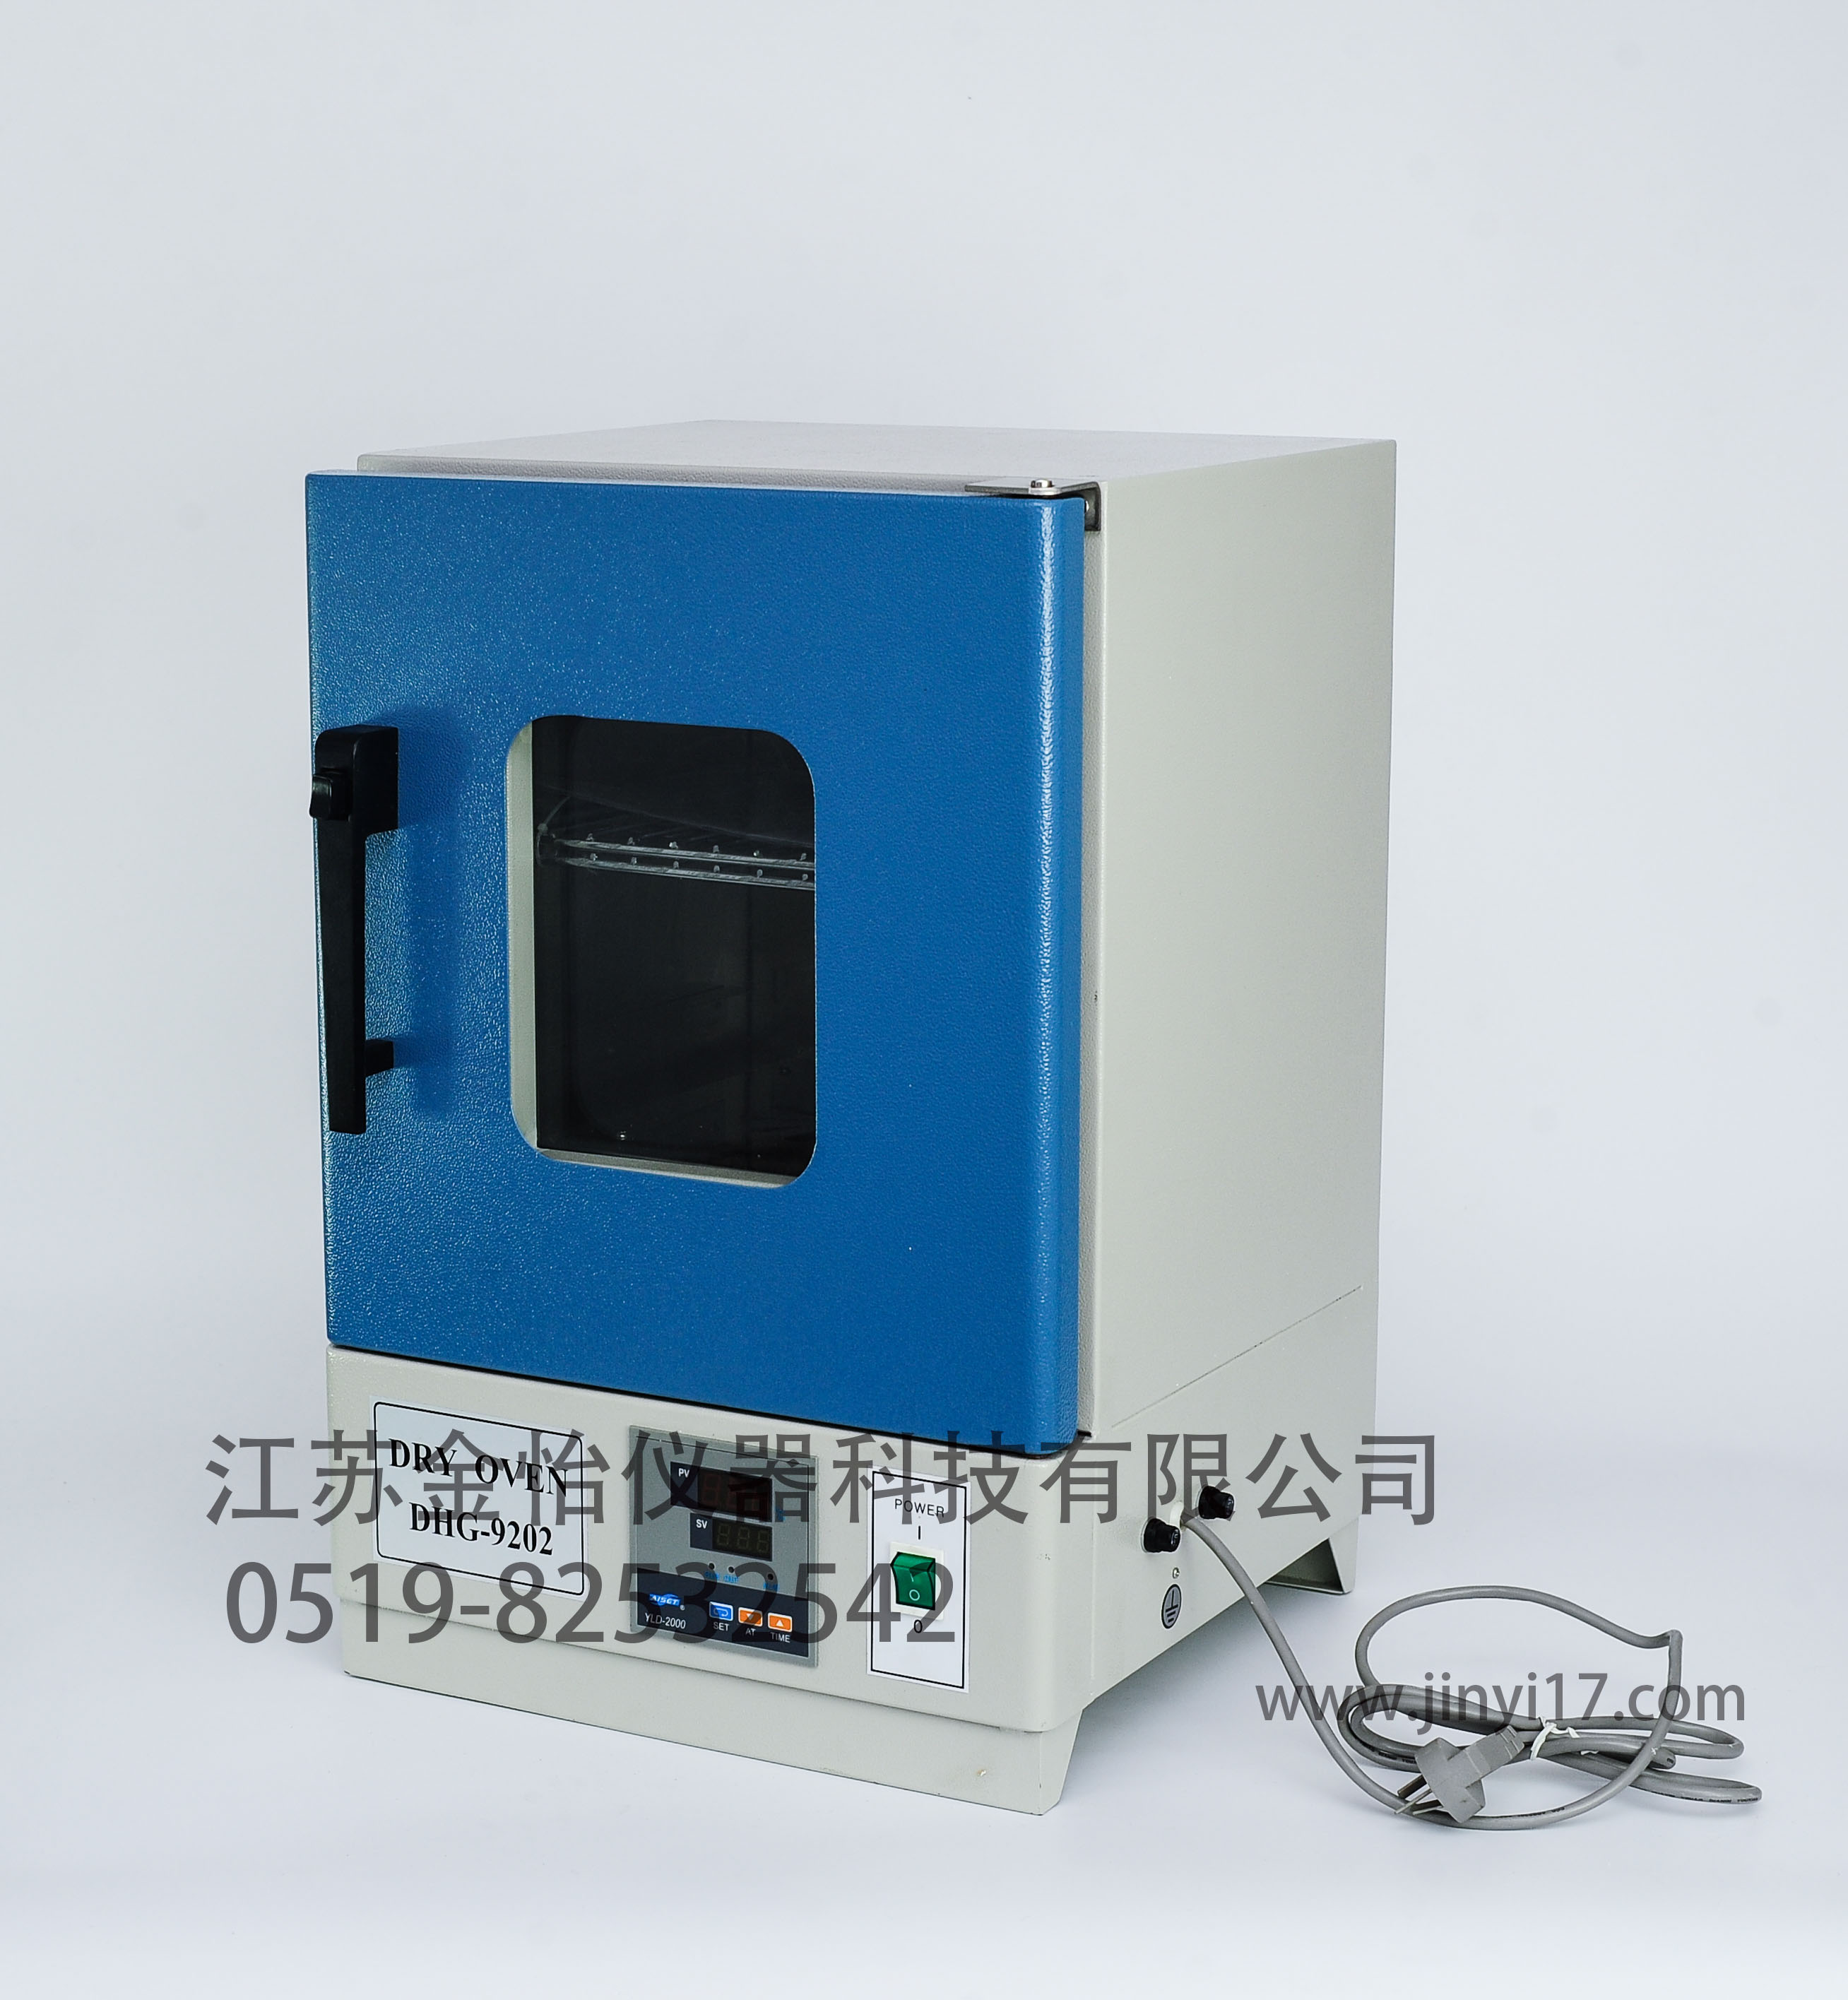 DHG-70  电热恒温干燥箱